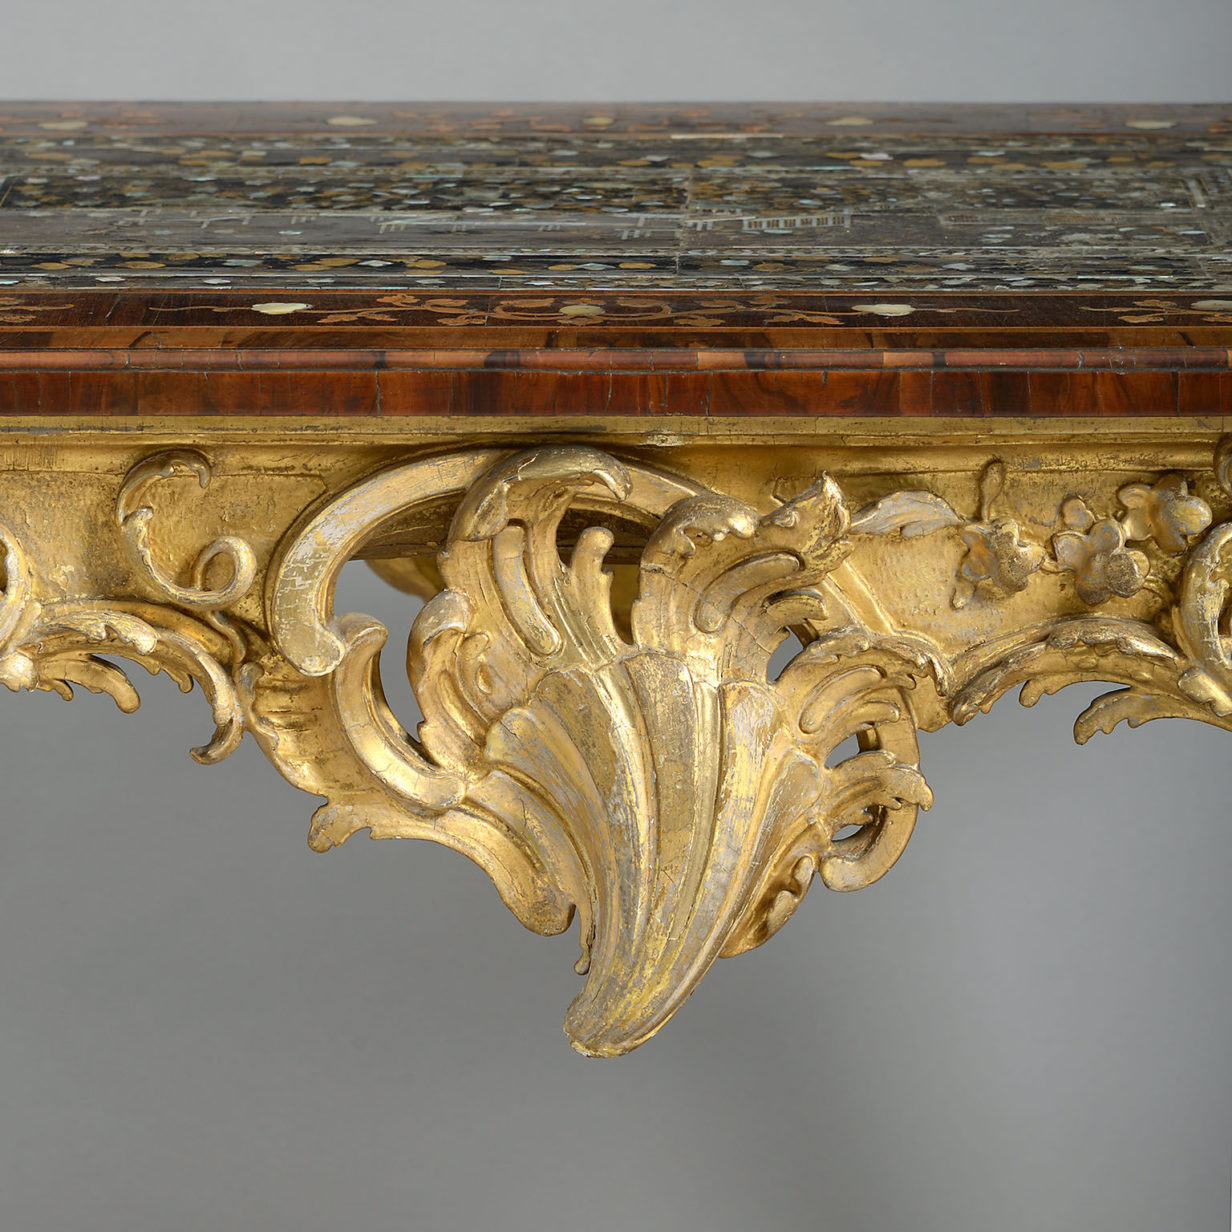 Rare 18th century german gilt-wood centre table